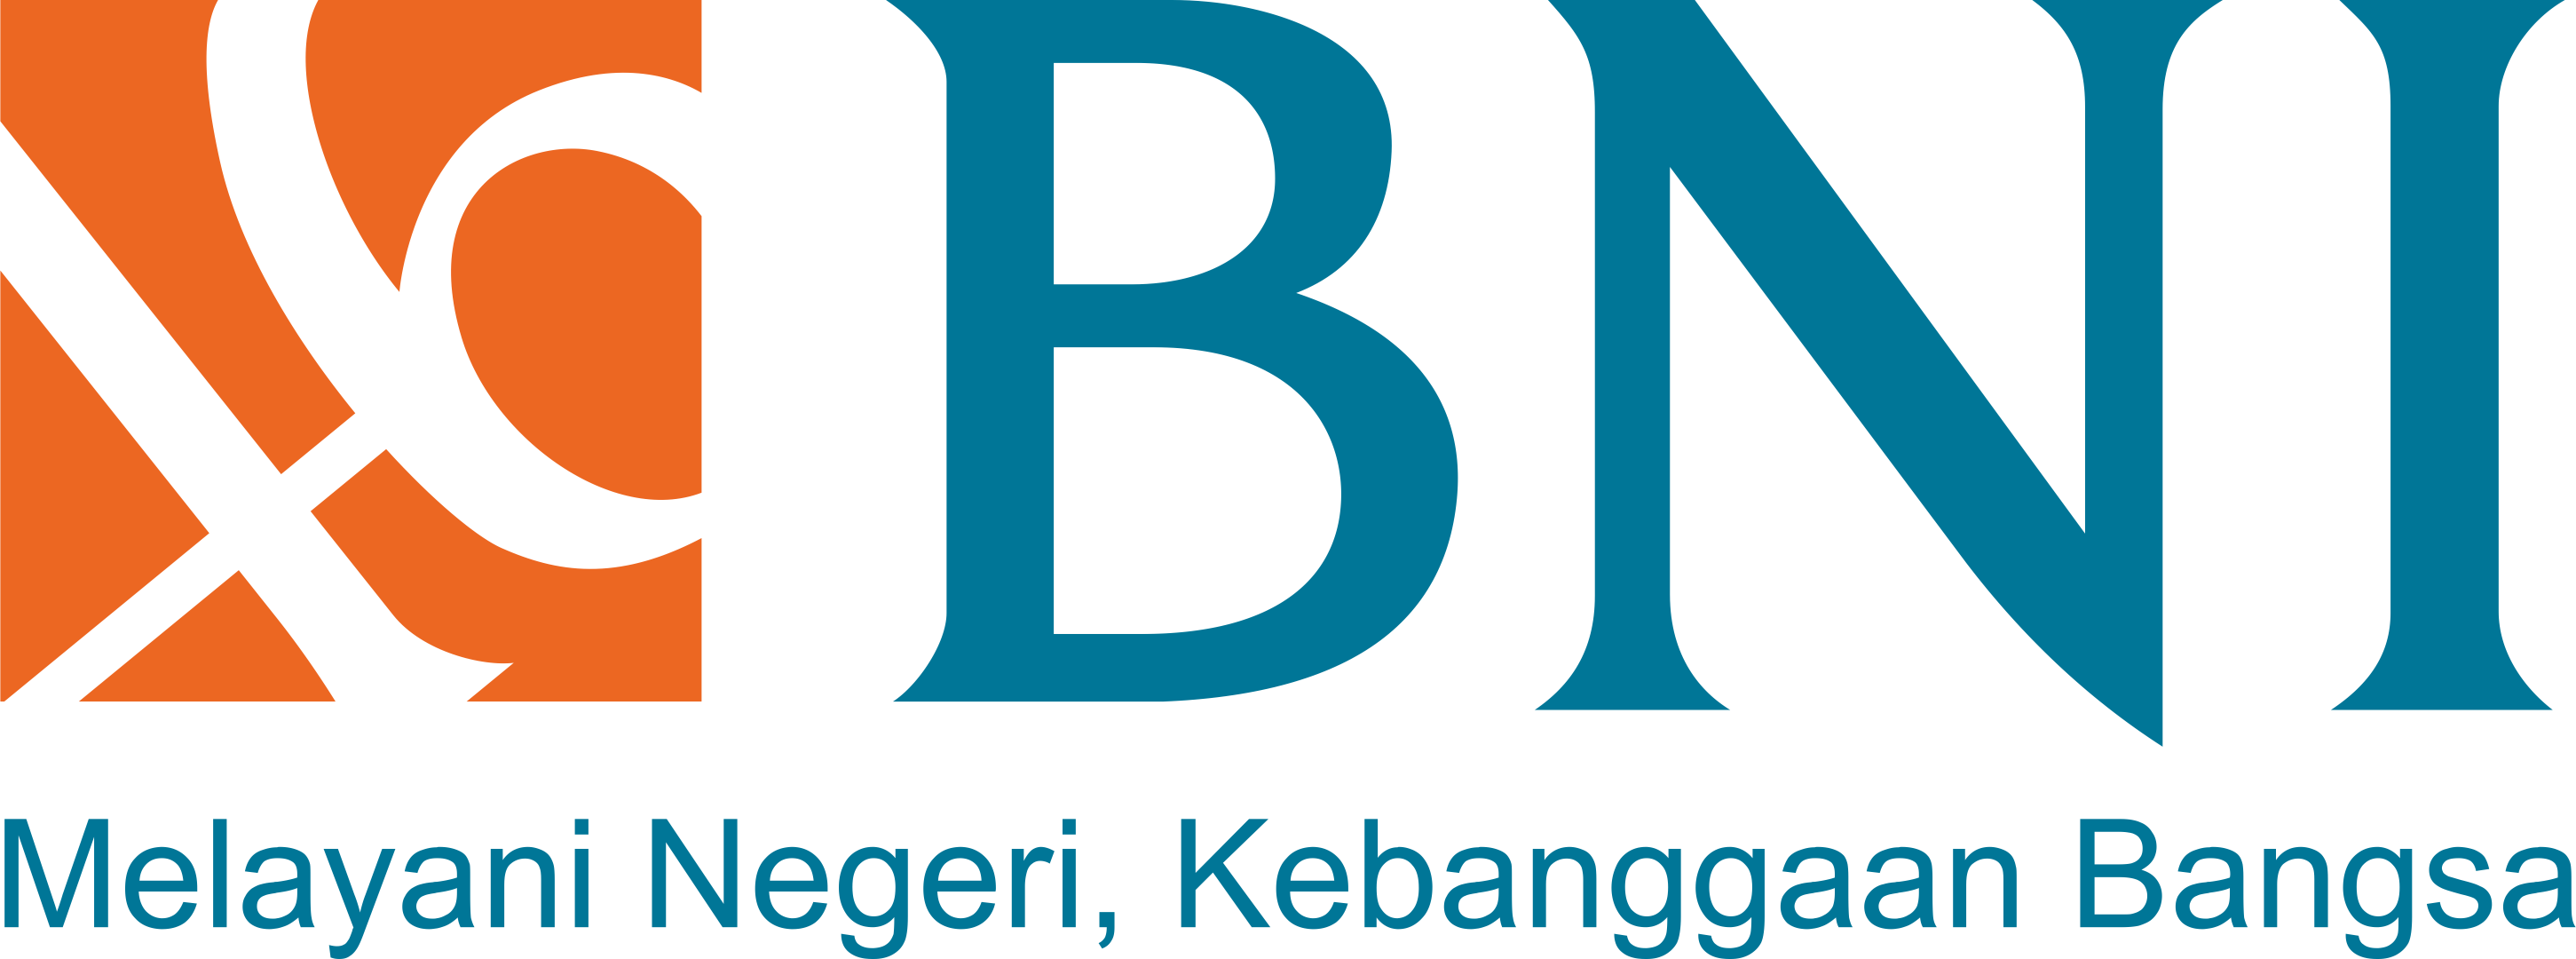 Bank-BNI-Logo-PNG-1080p-FileVector69-1.png